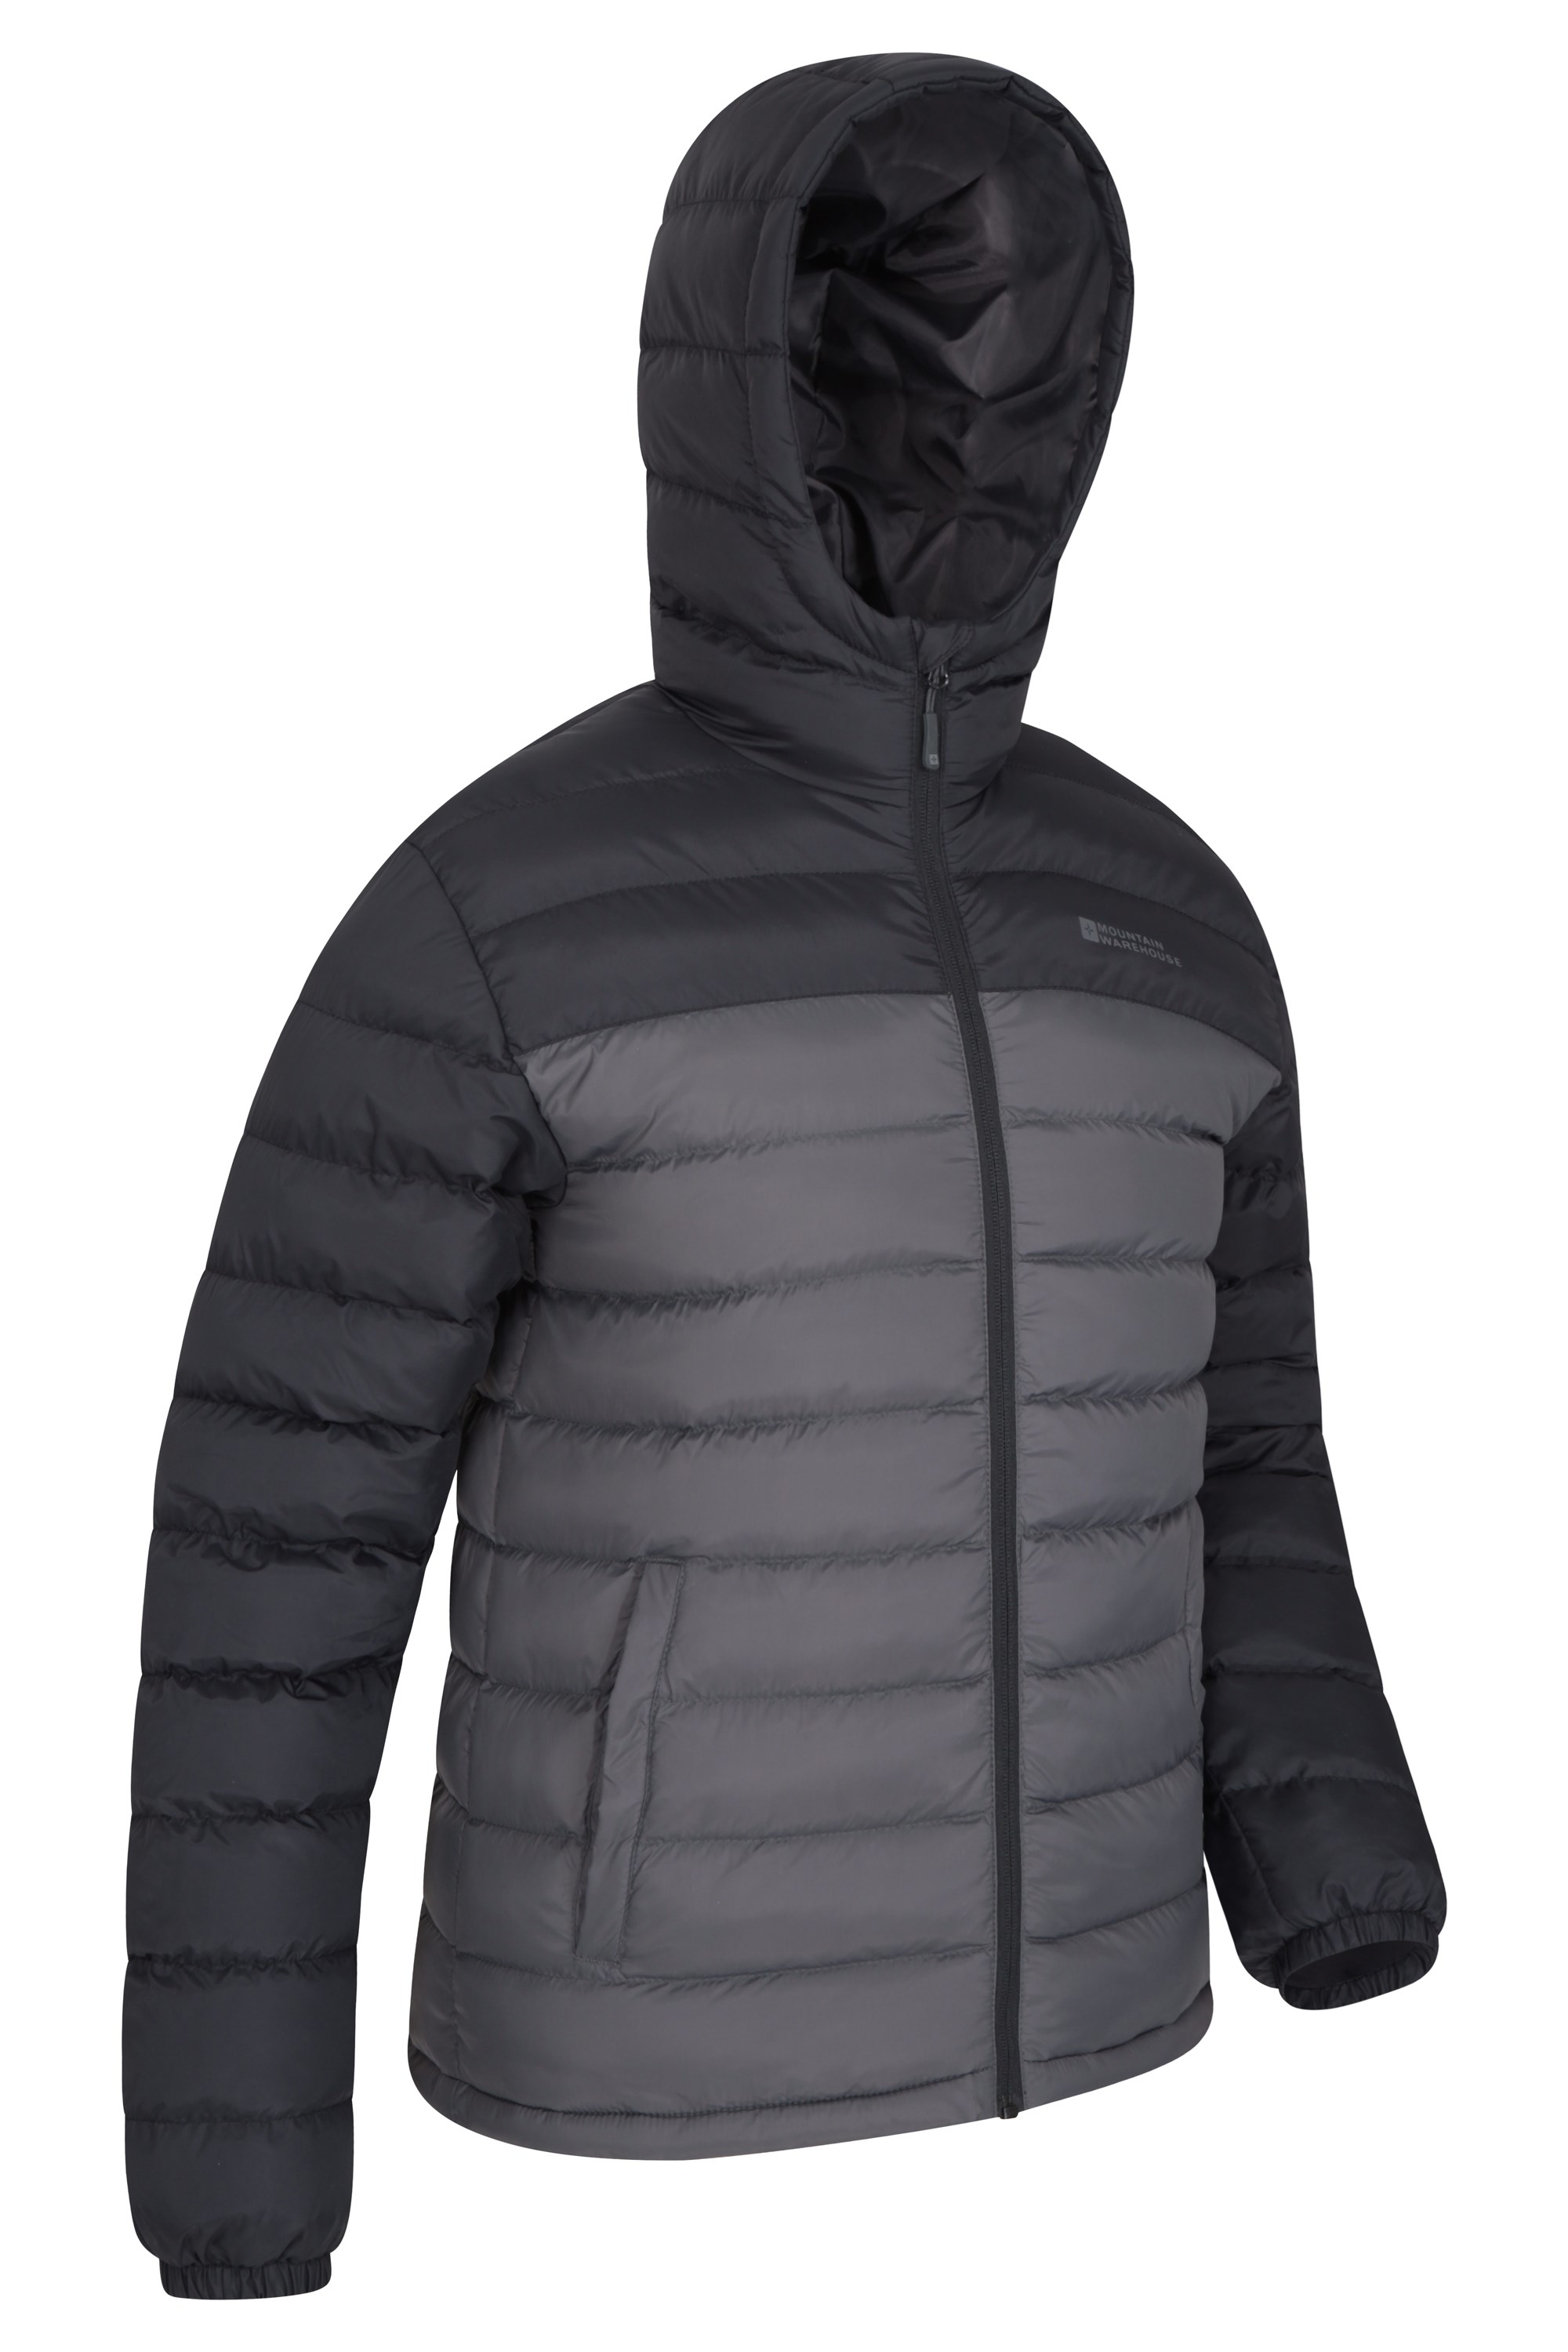 Houshelp Mens Jacket Outdoor Sports Windproof Mountain Coat Puffer Coat Insulated Windproof Quilted Jacket Overcoat